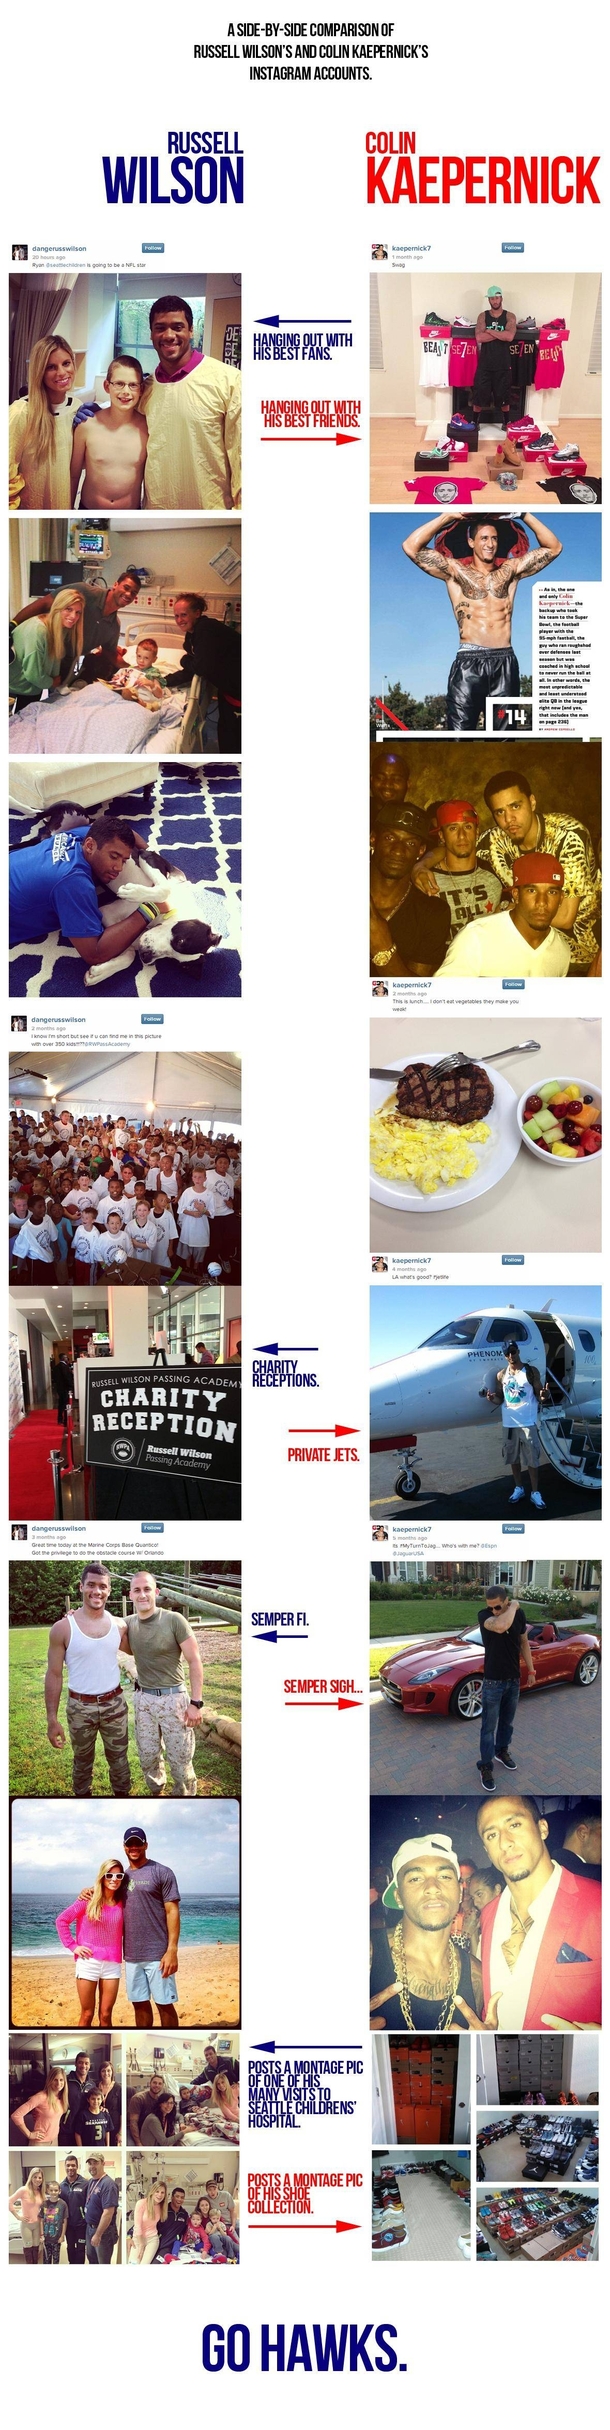 Comparison of R Wilson and C Kaepernick Instagram accounts